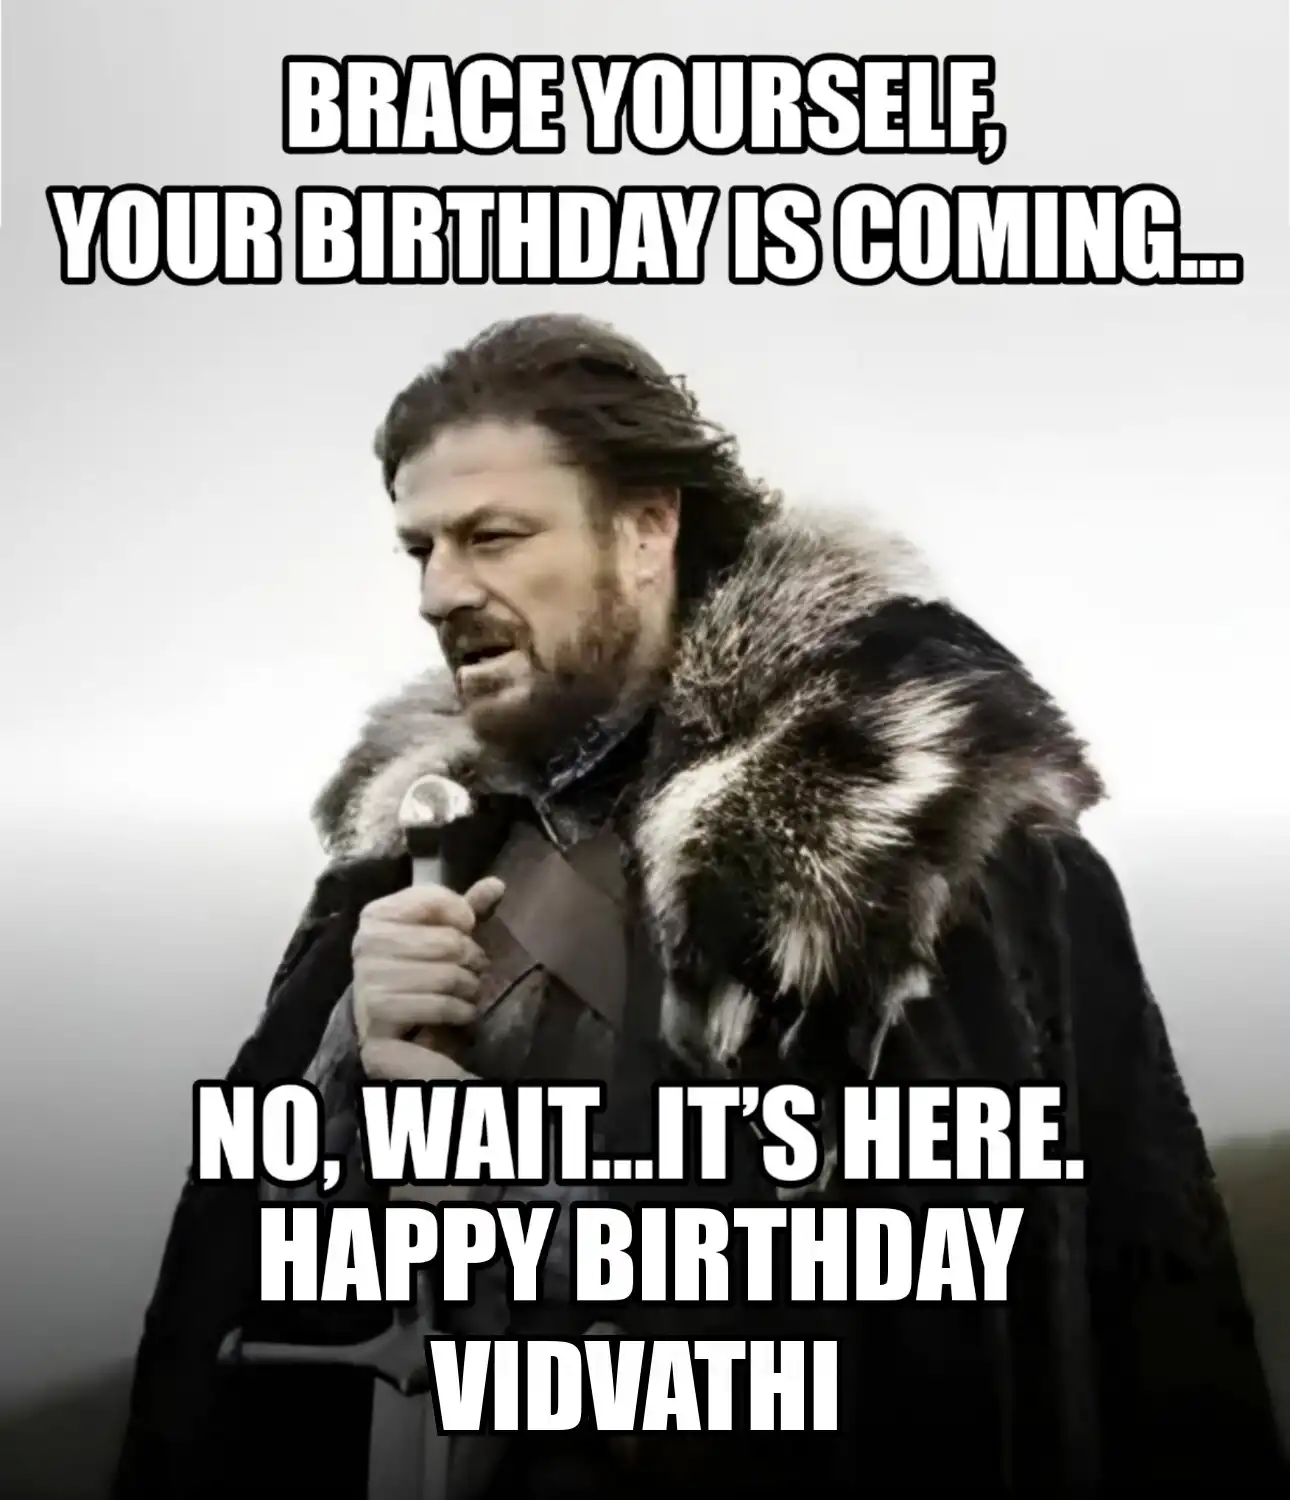 Happy Birthday Vidvathi Brace Yourself Your Birthday Is Coming Meme